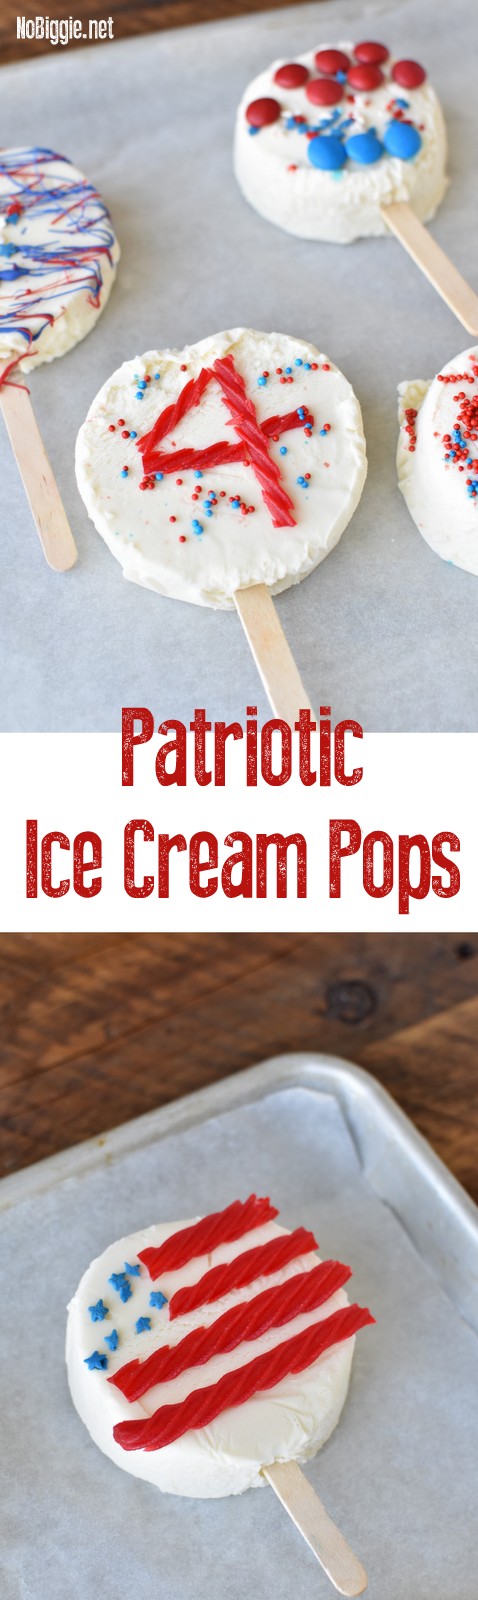 Patriotic Ice Cream Pops for kids | NoBiggie.net